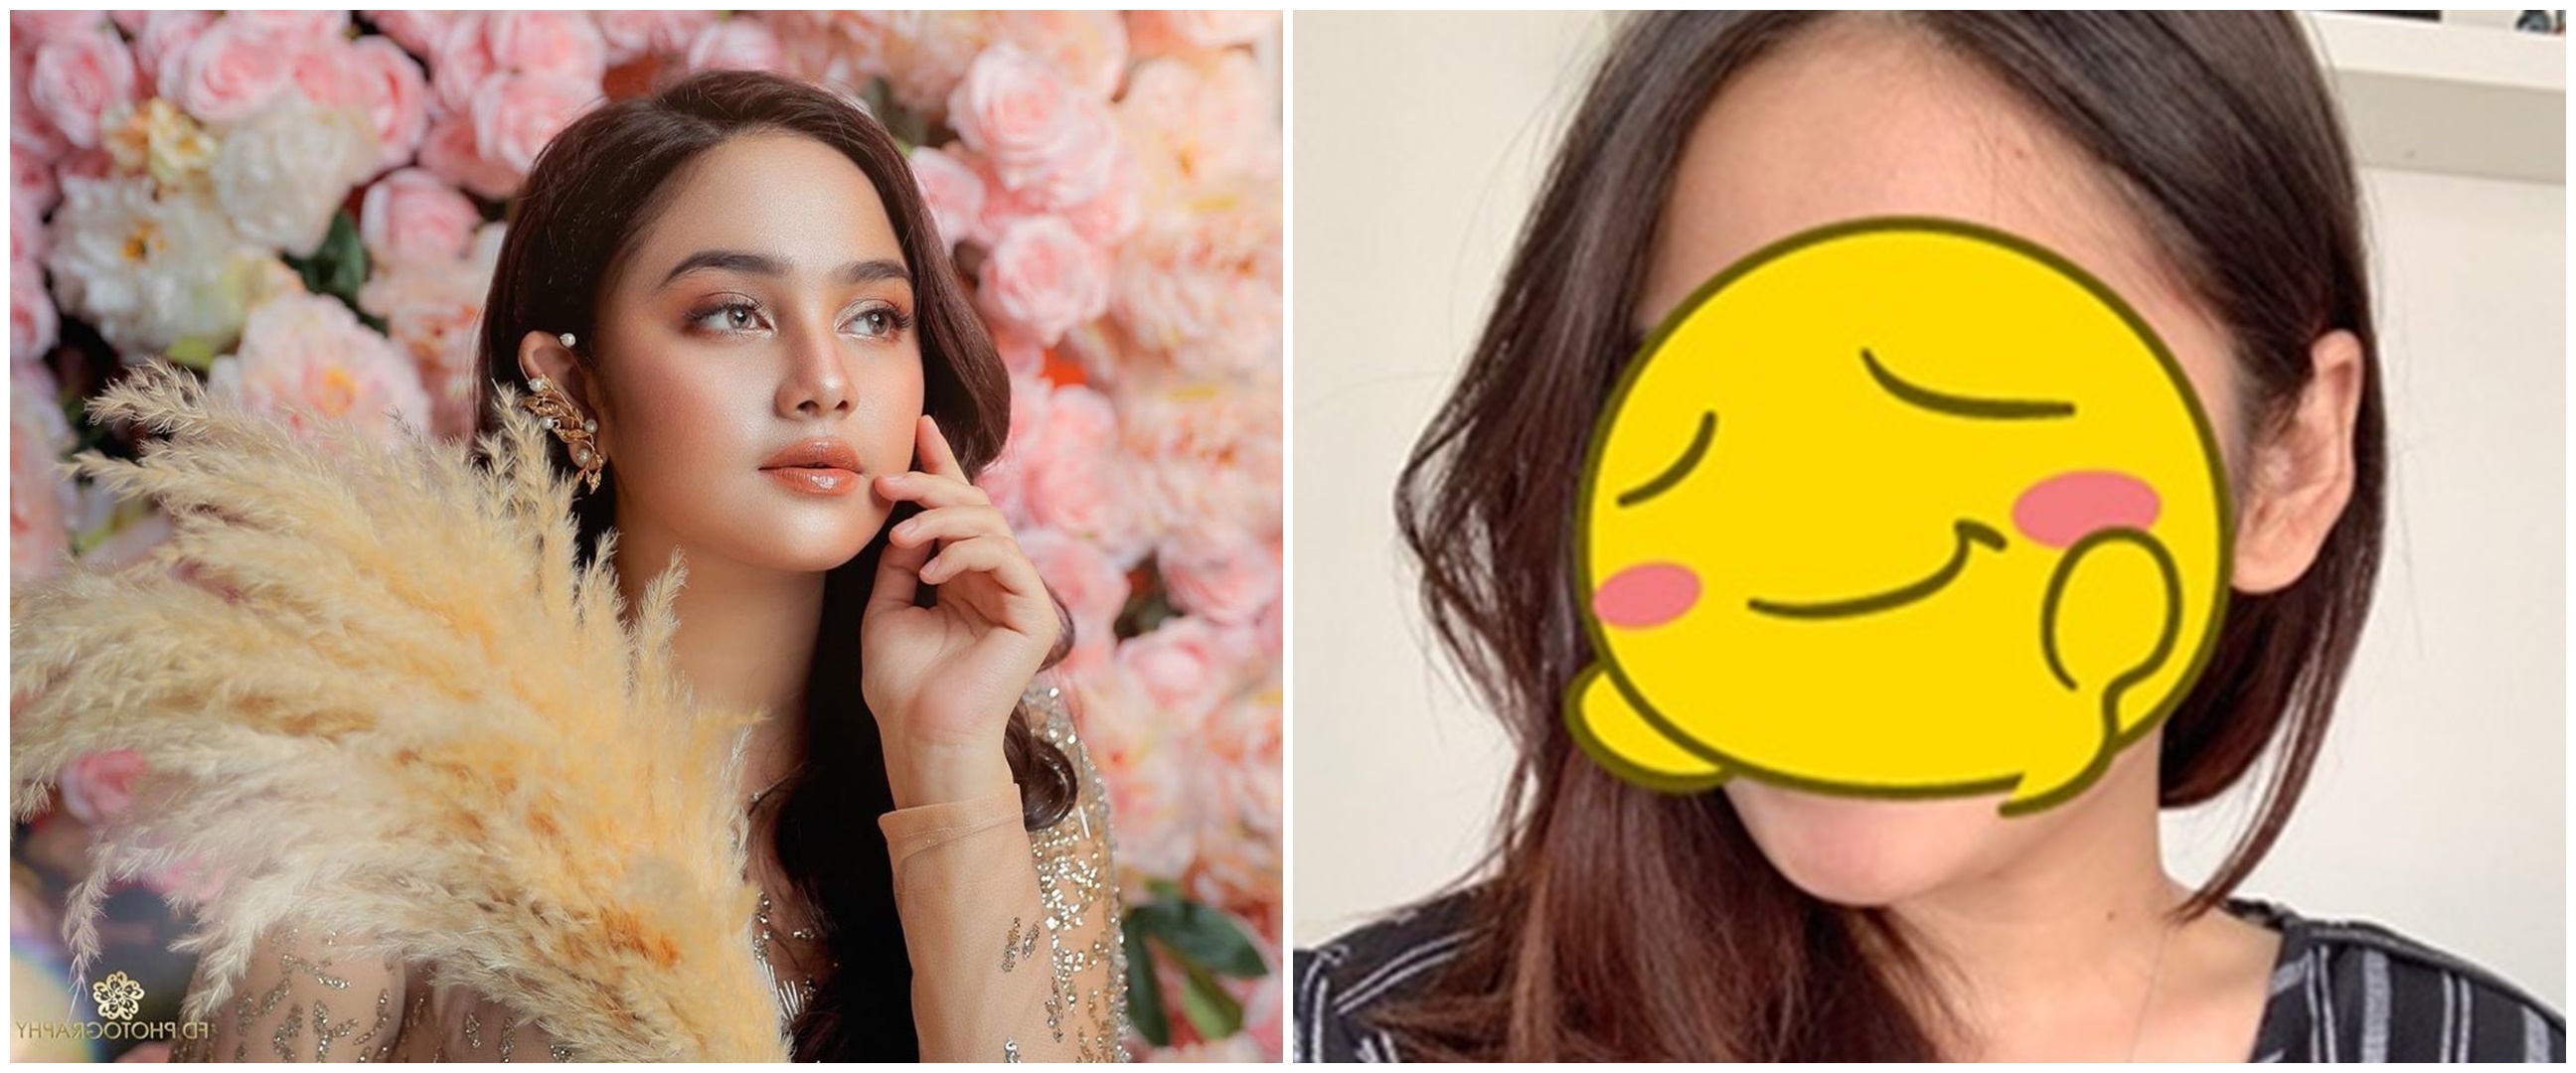 Potret 10 artis cantik FTV pakai vs tanpa makeup, kontras banget